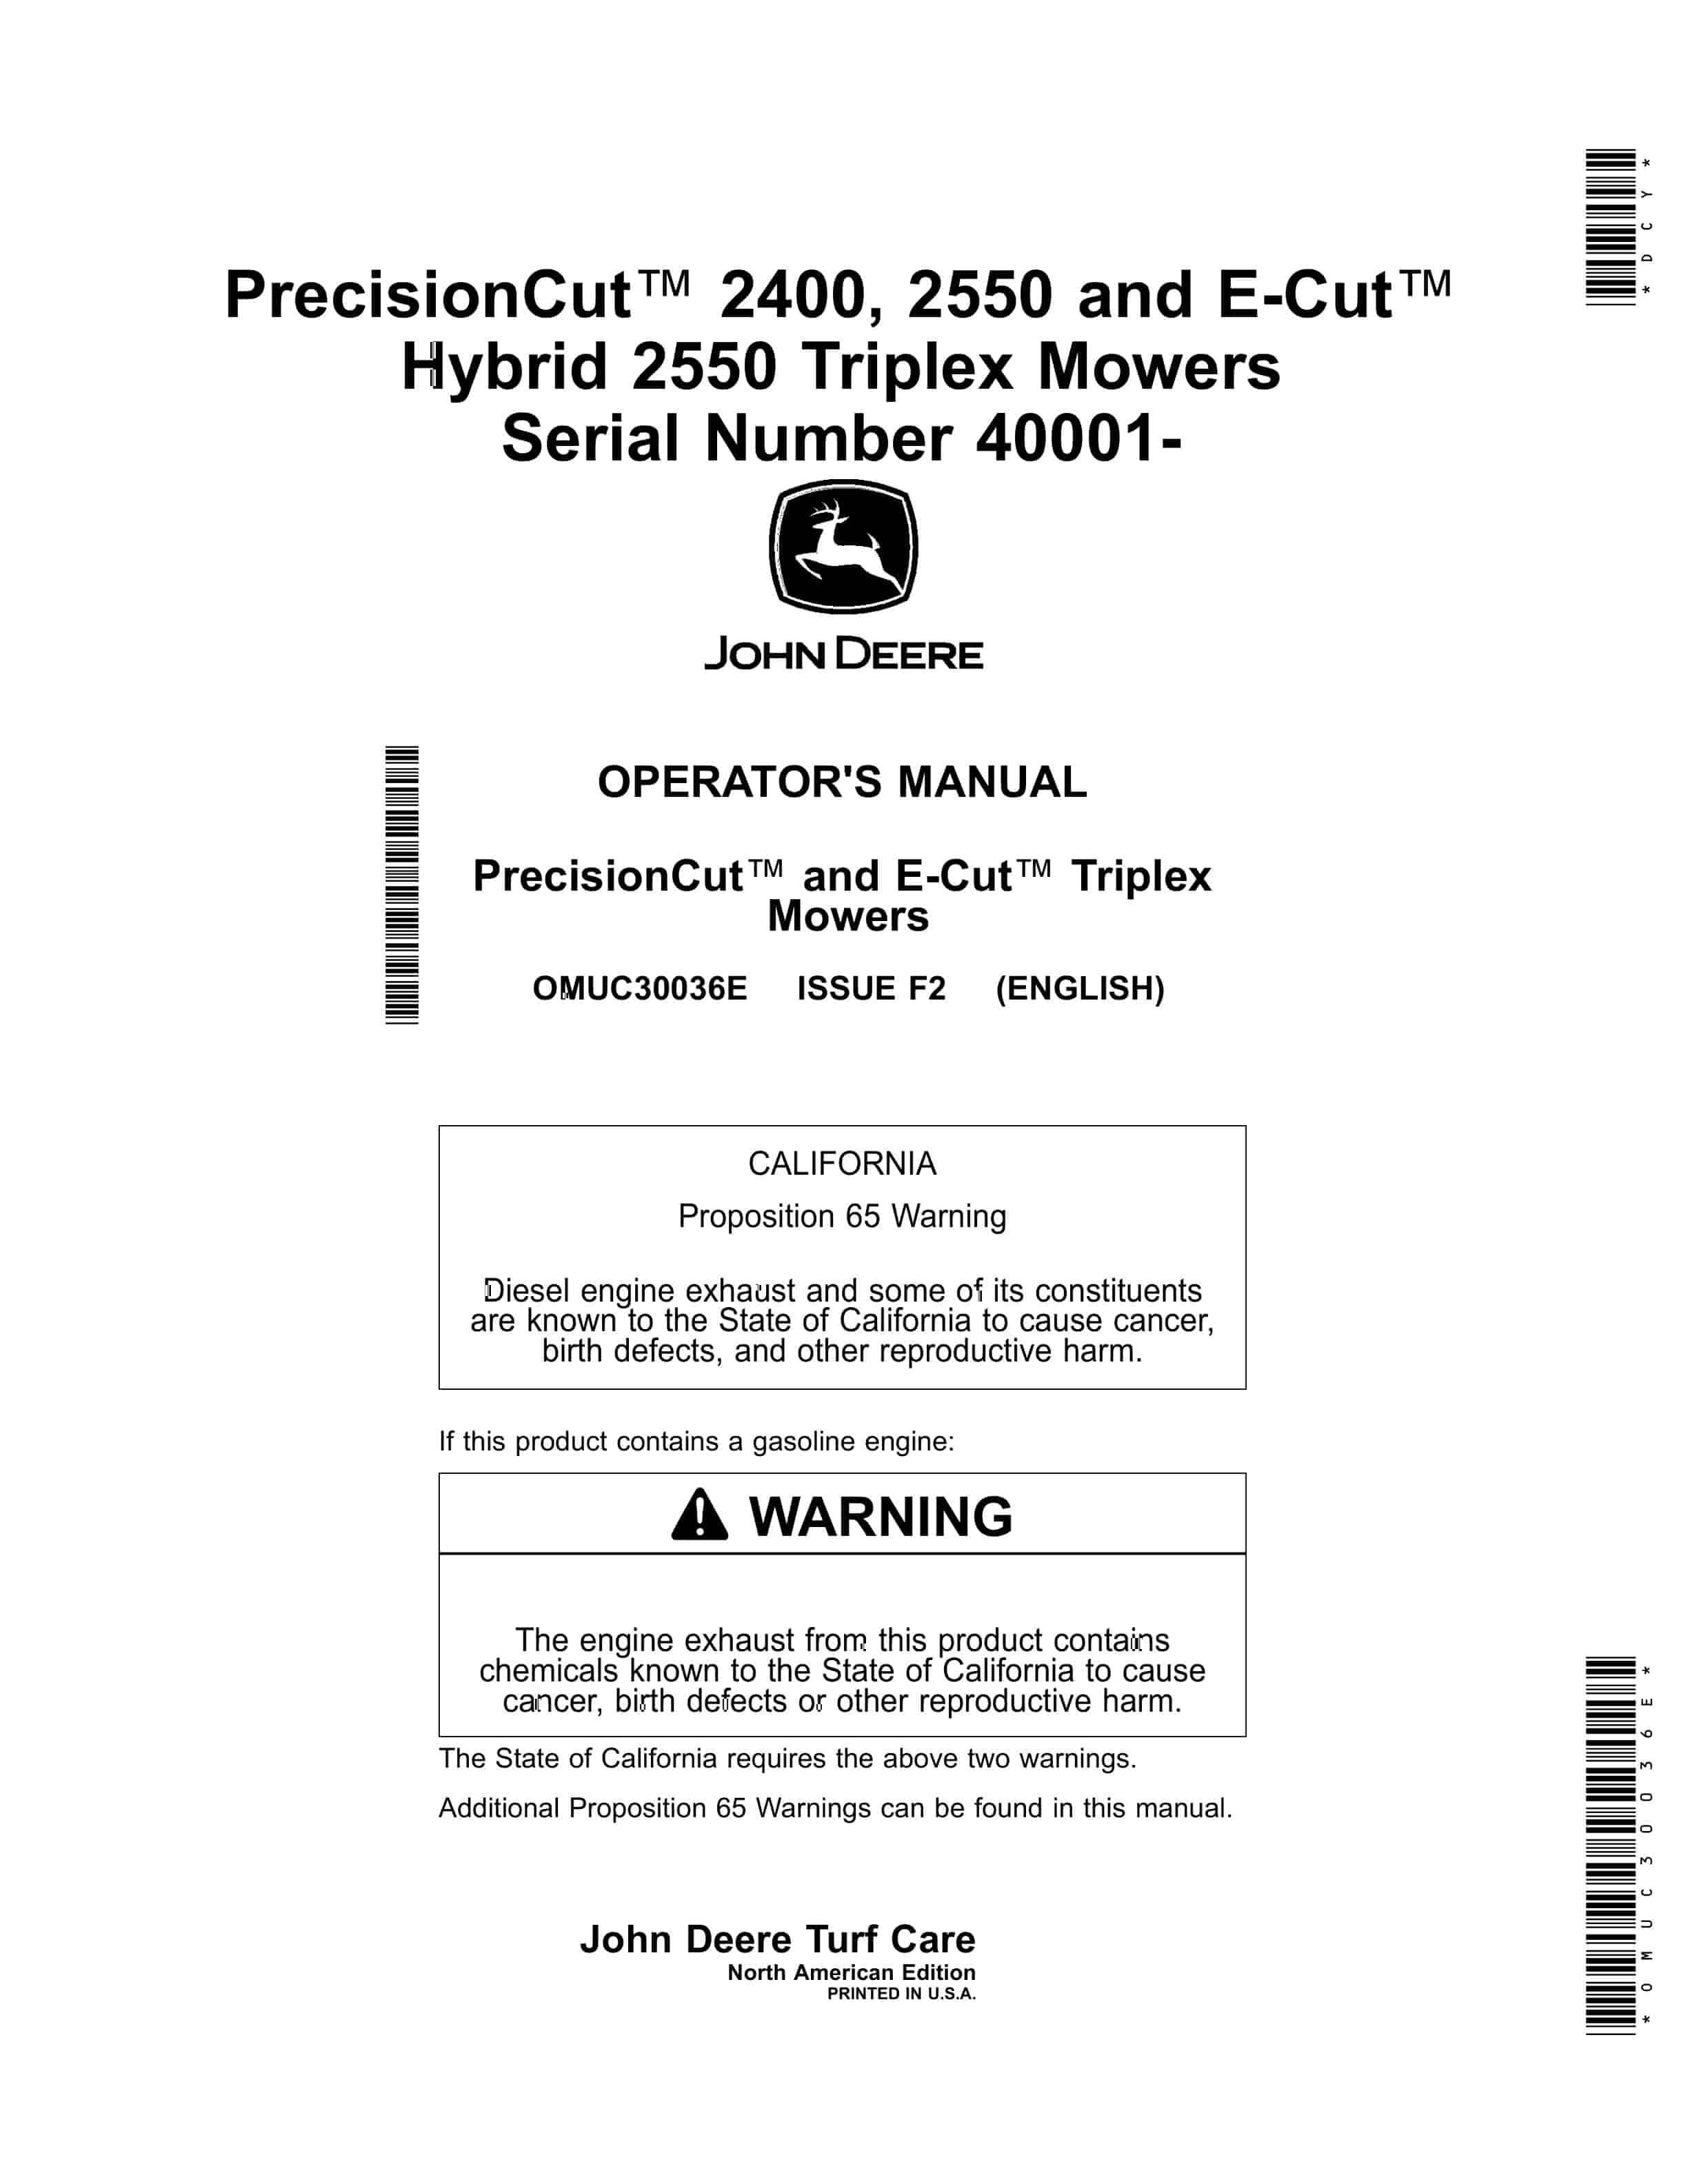 John Deere PrecisionCut 2400 2550 and E Operator Manual OMUC30036E 1